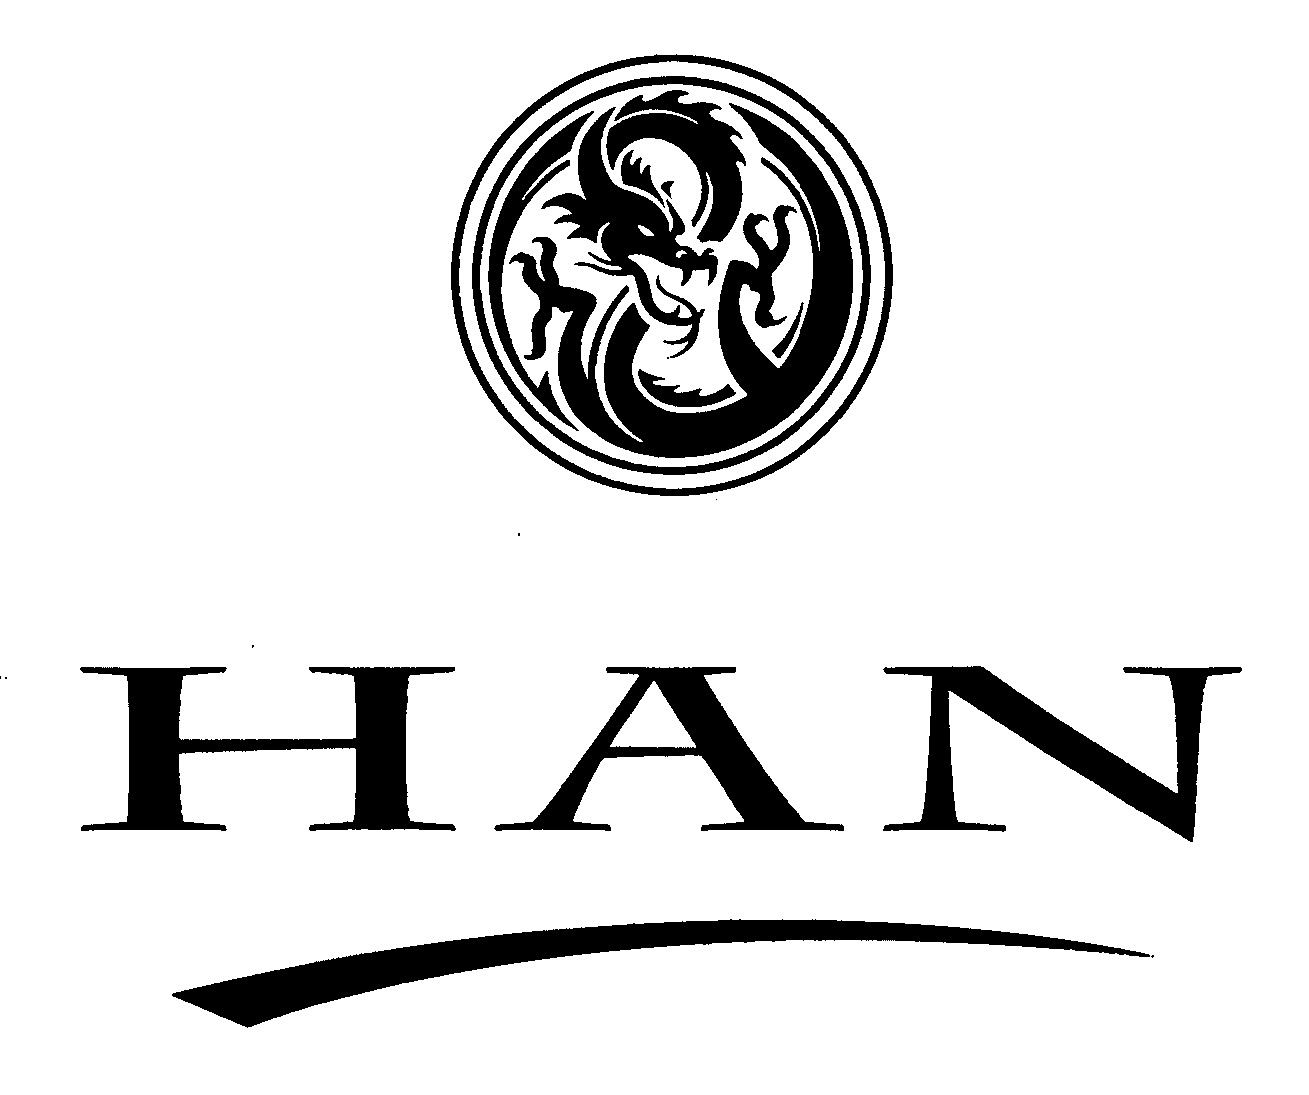 Trademark Logo HAN